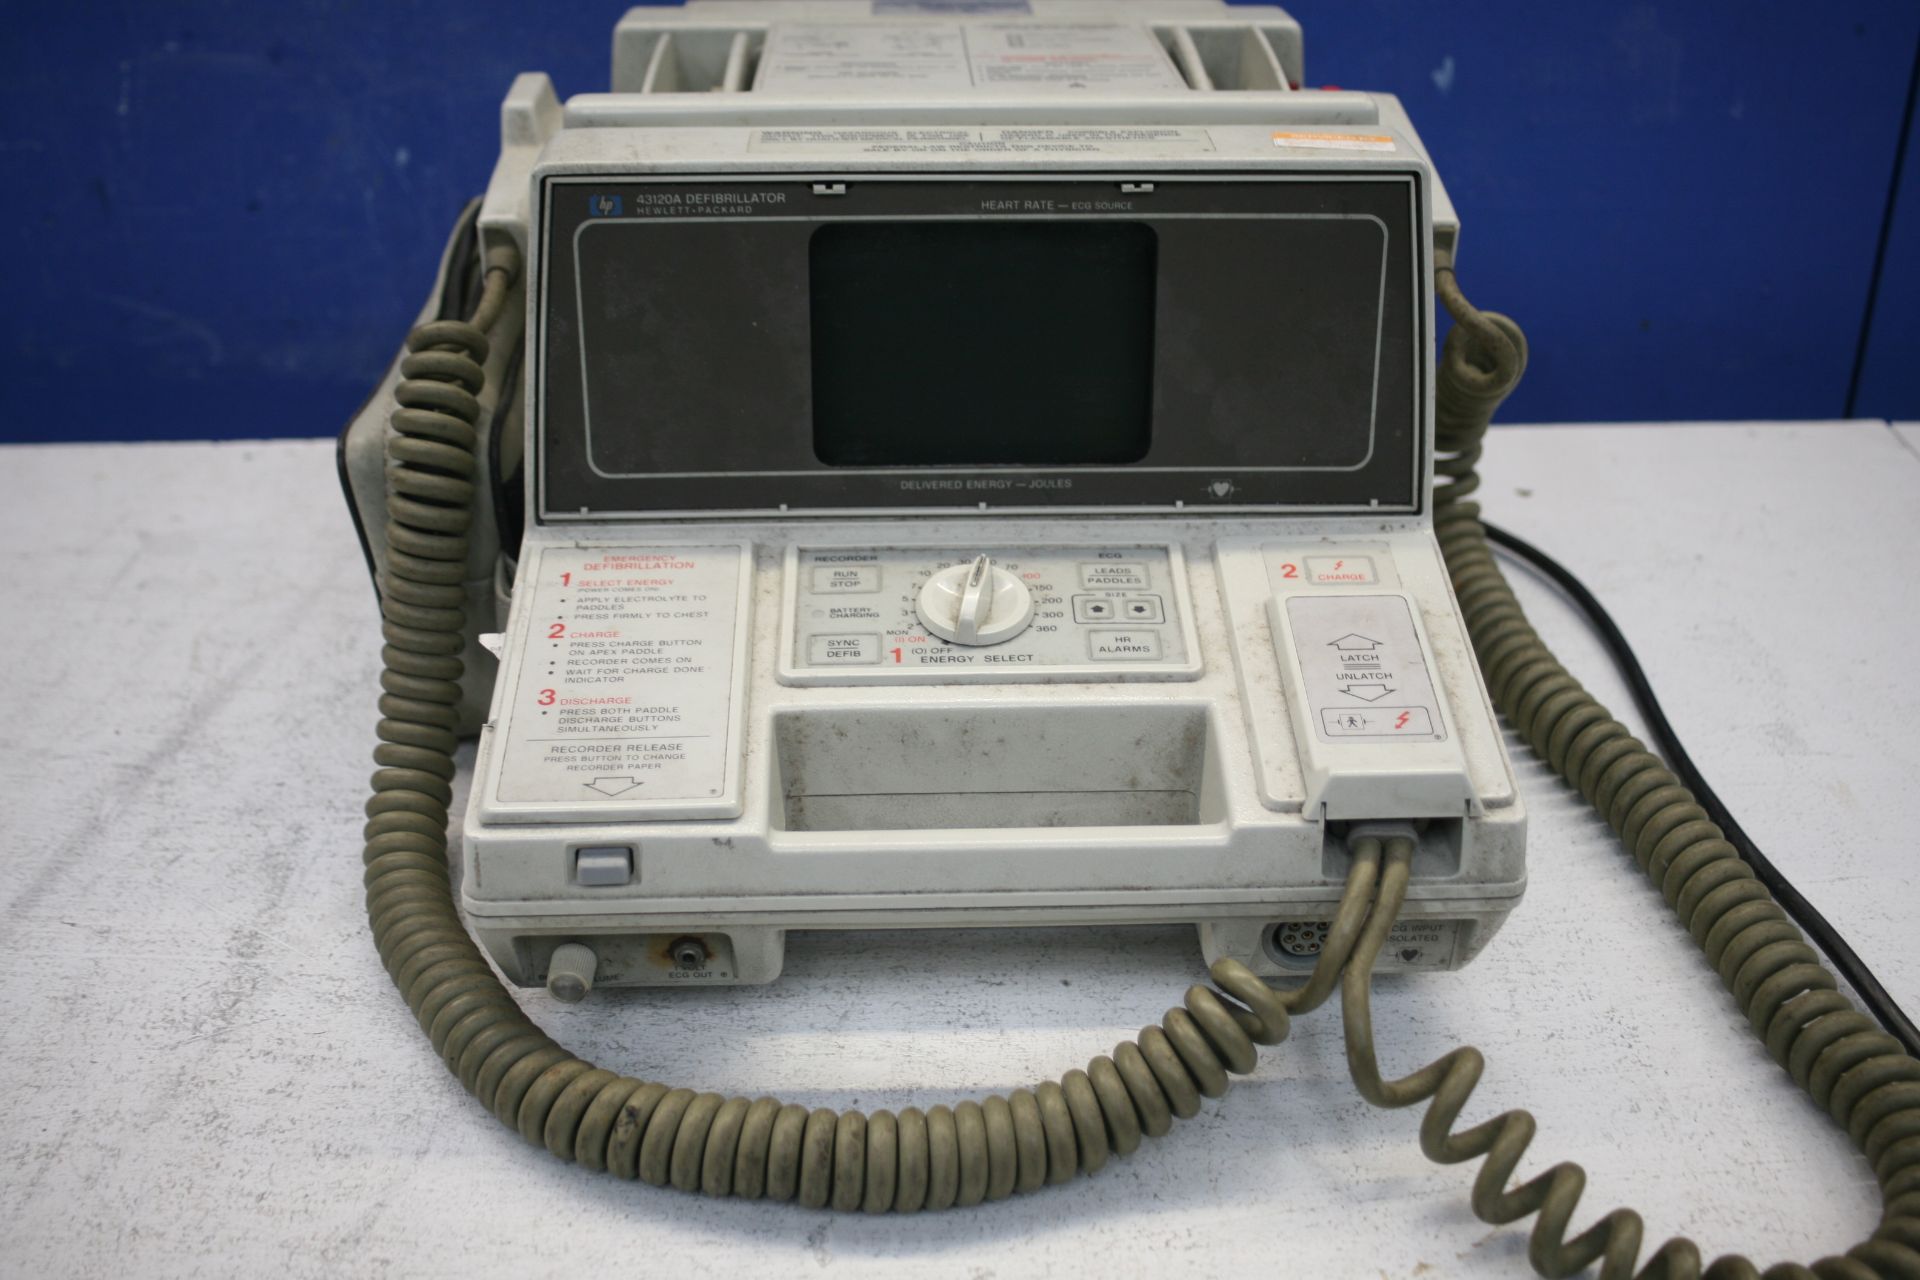 Hewlett Packard 43120A Defibrillator with Paddles *No Power*